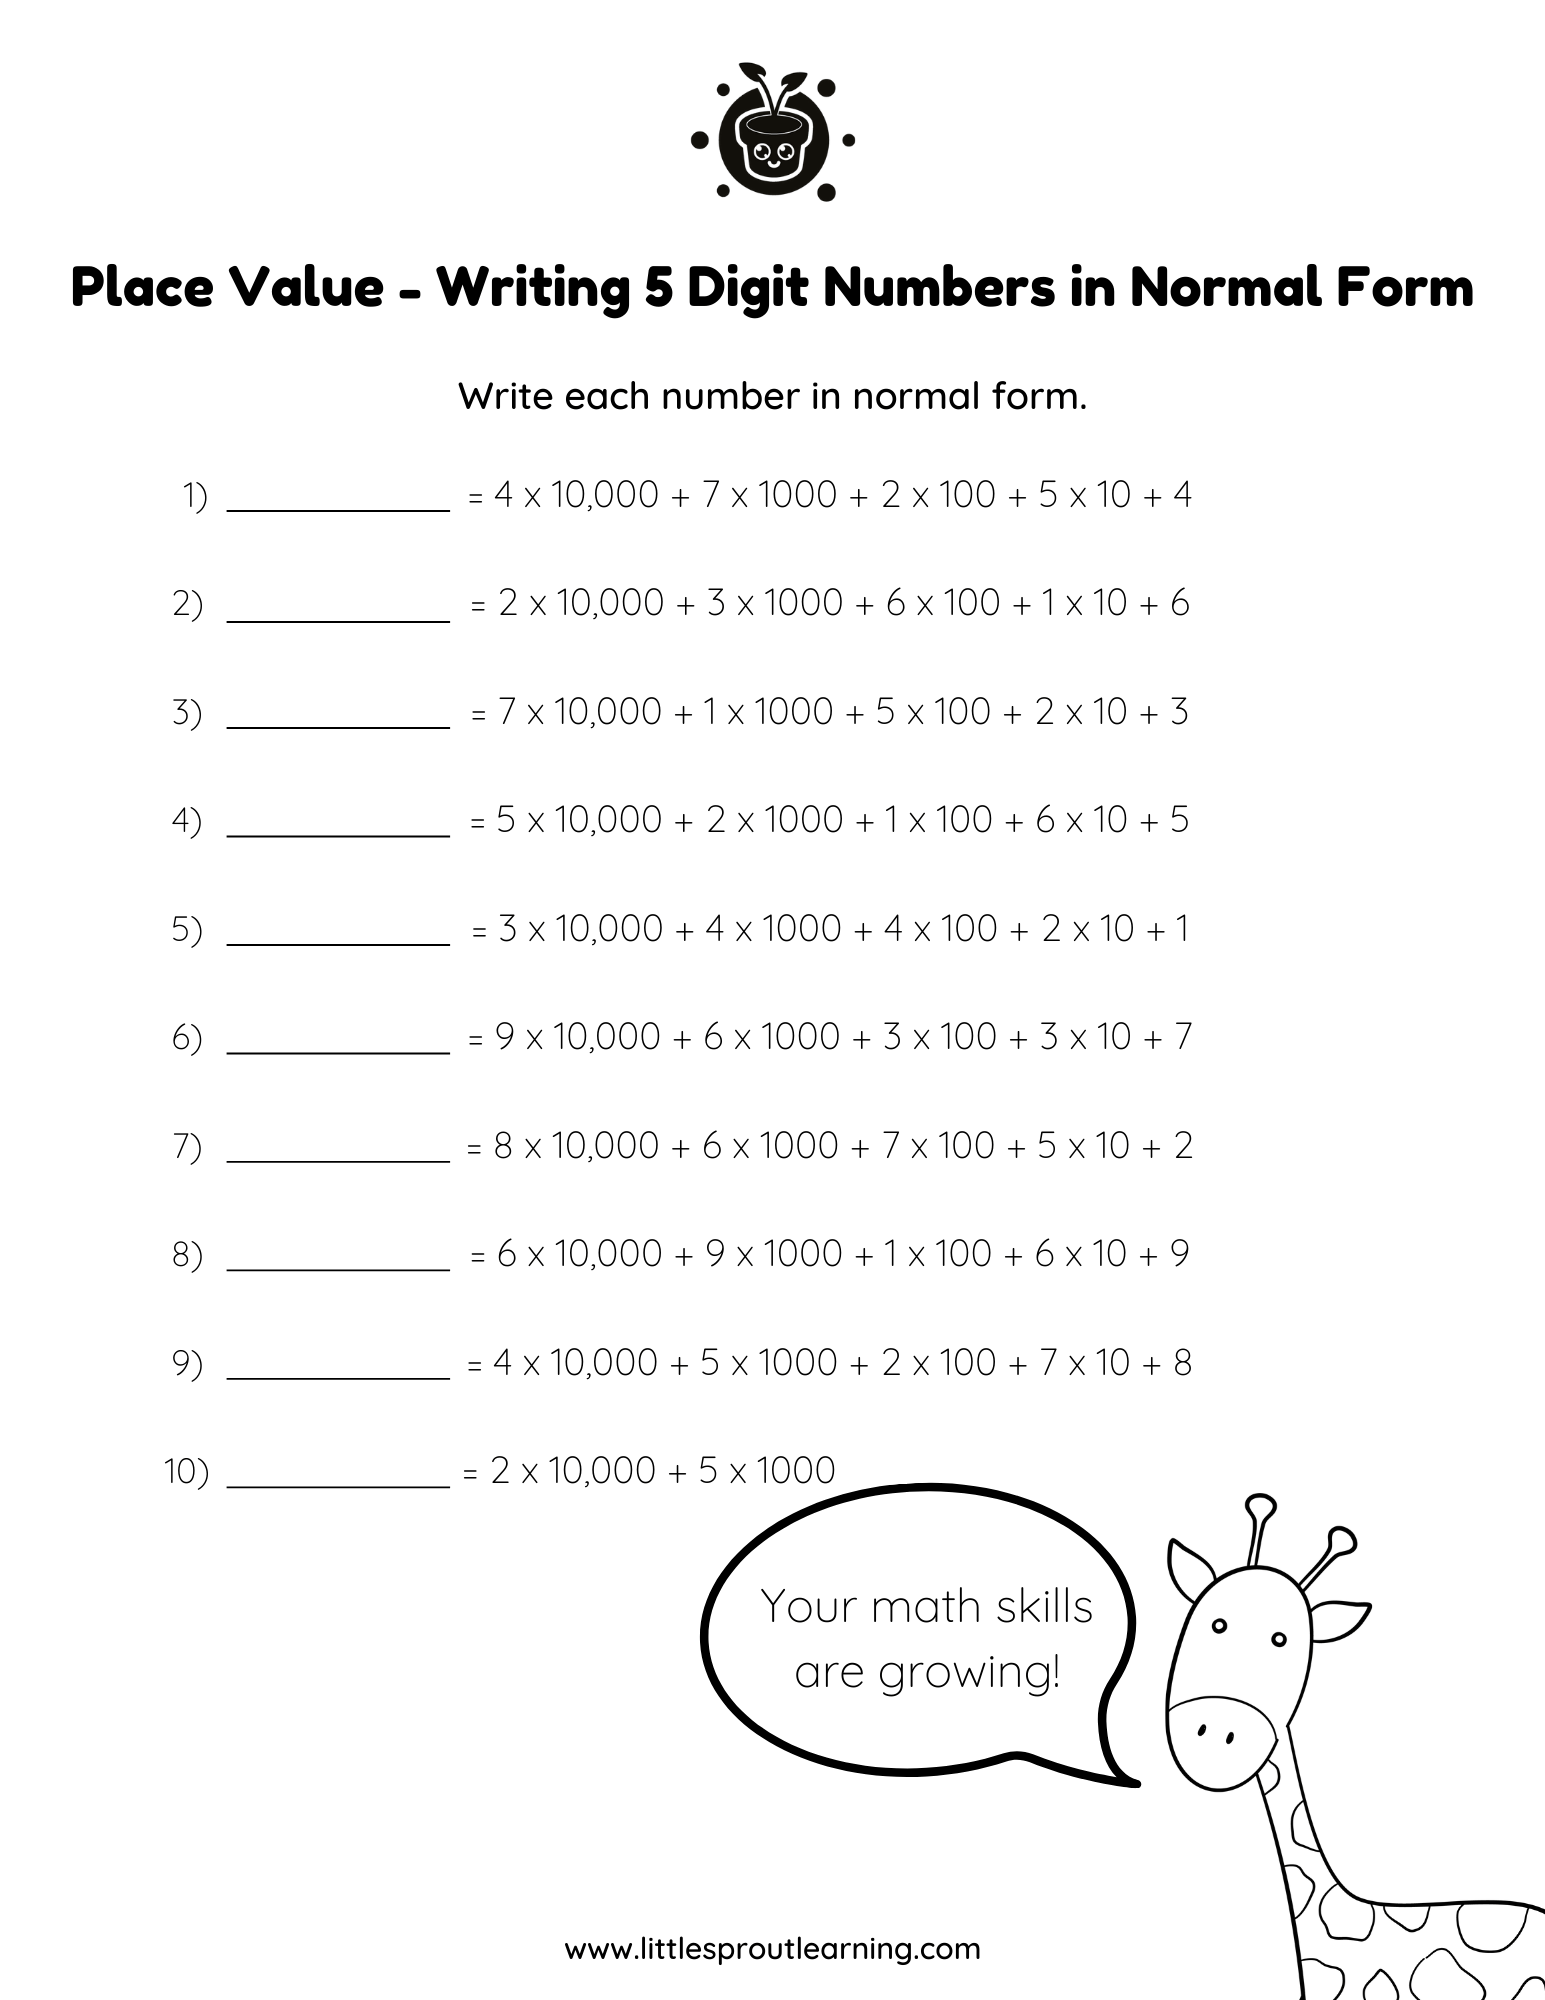 Write 5 Digit Numbers in Normal Form